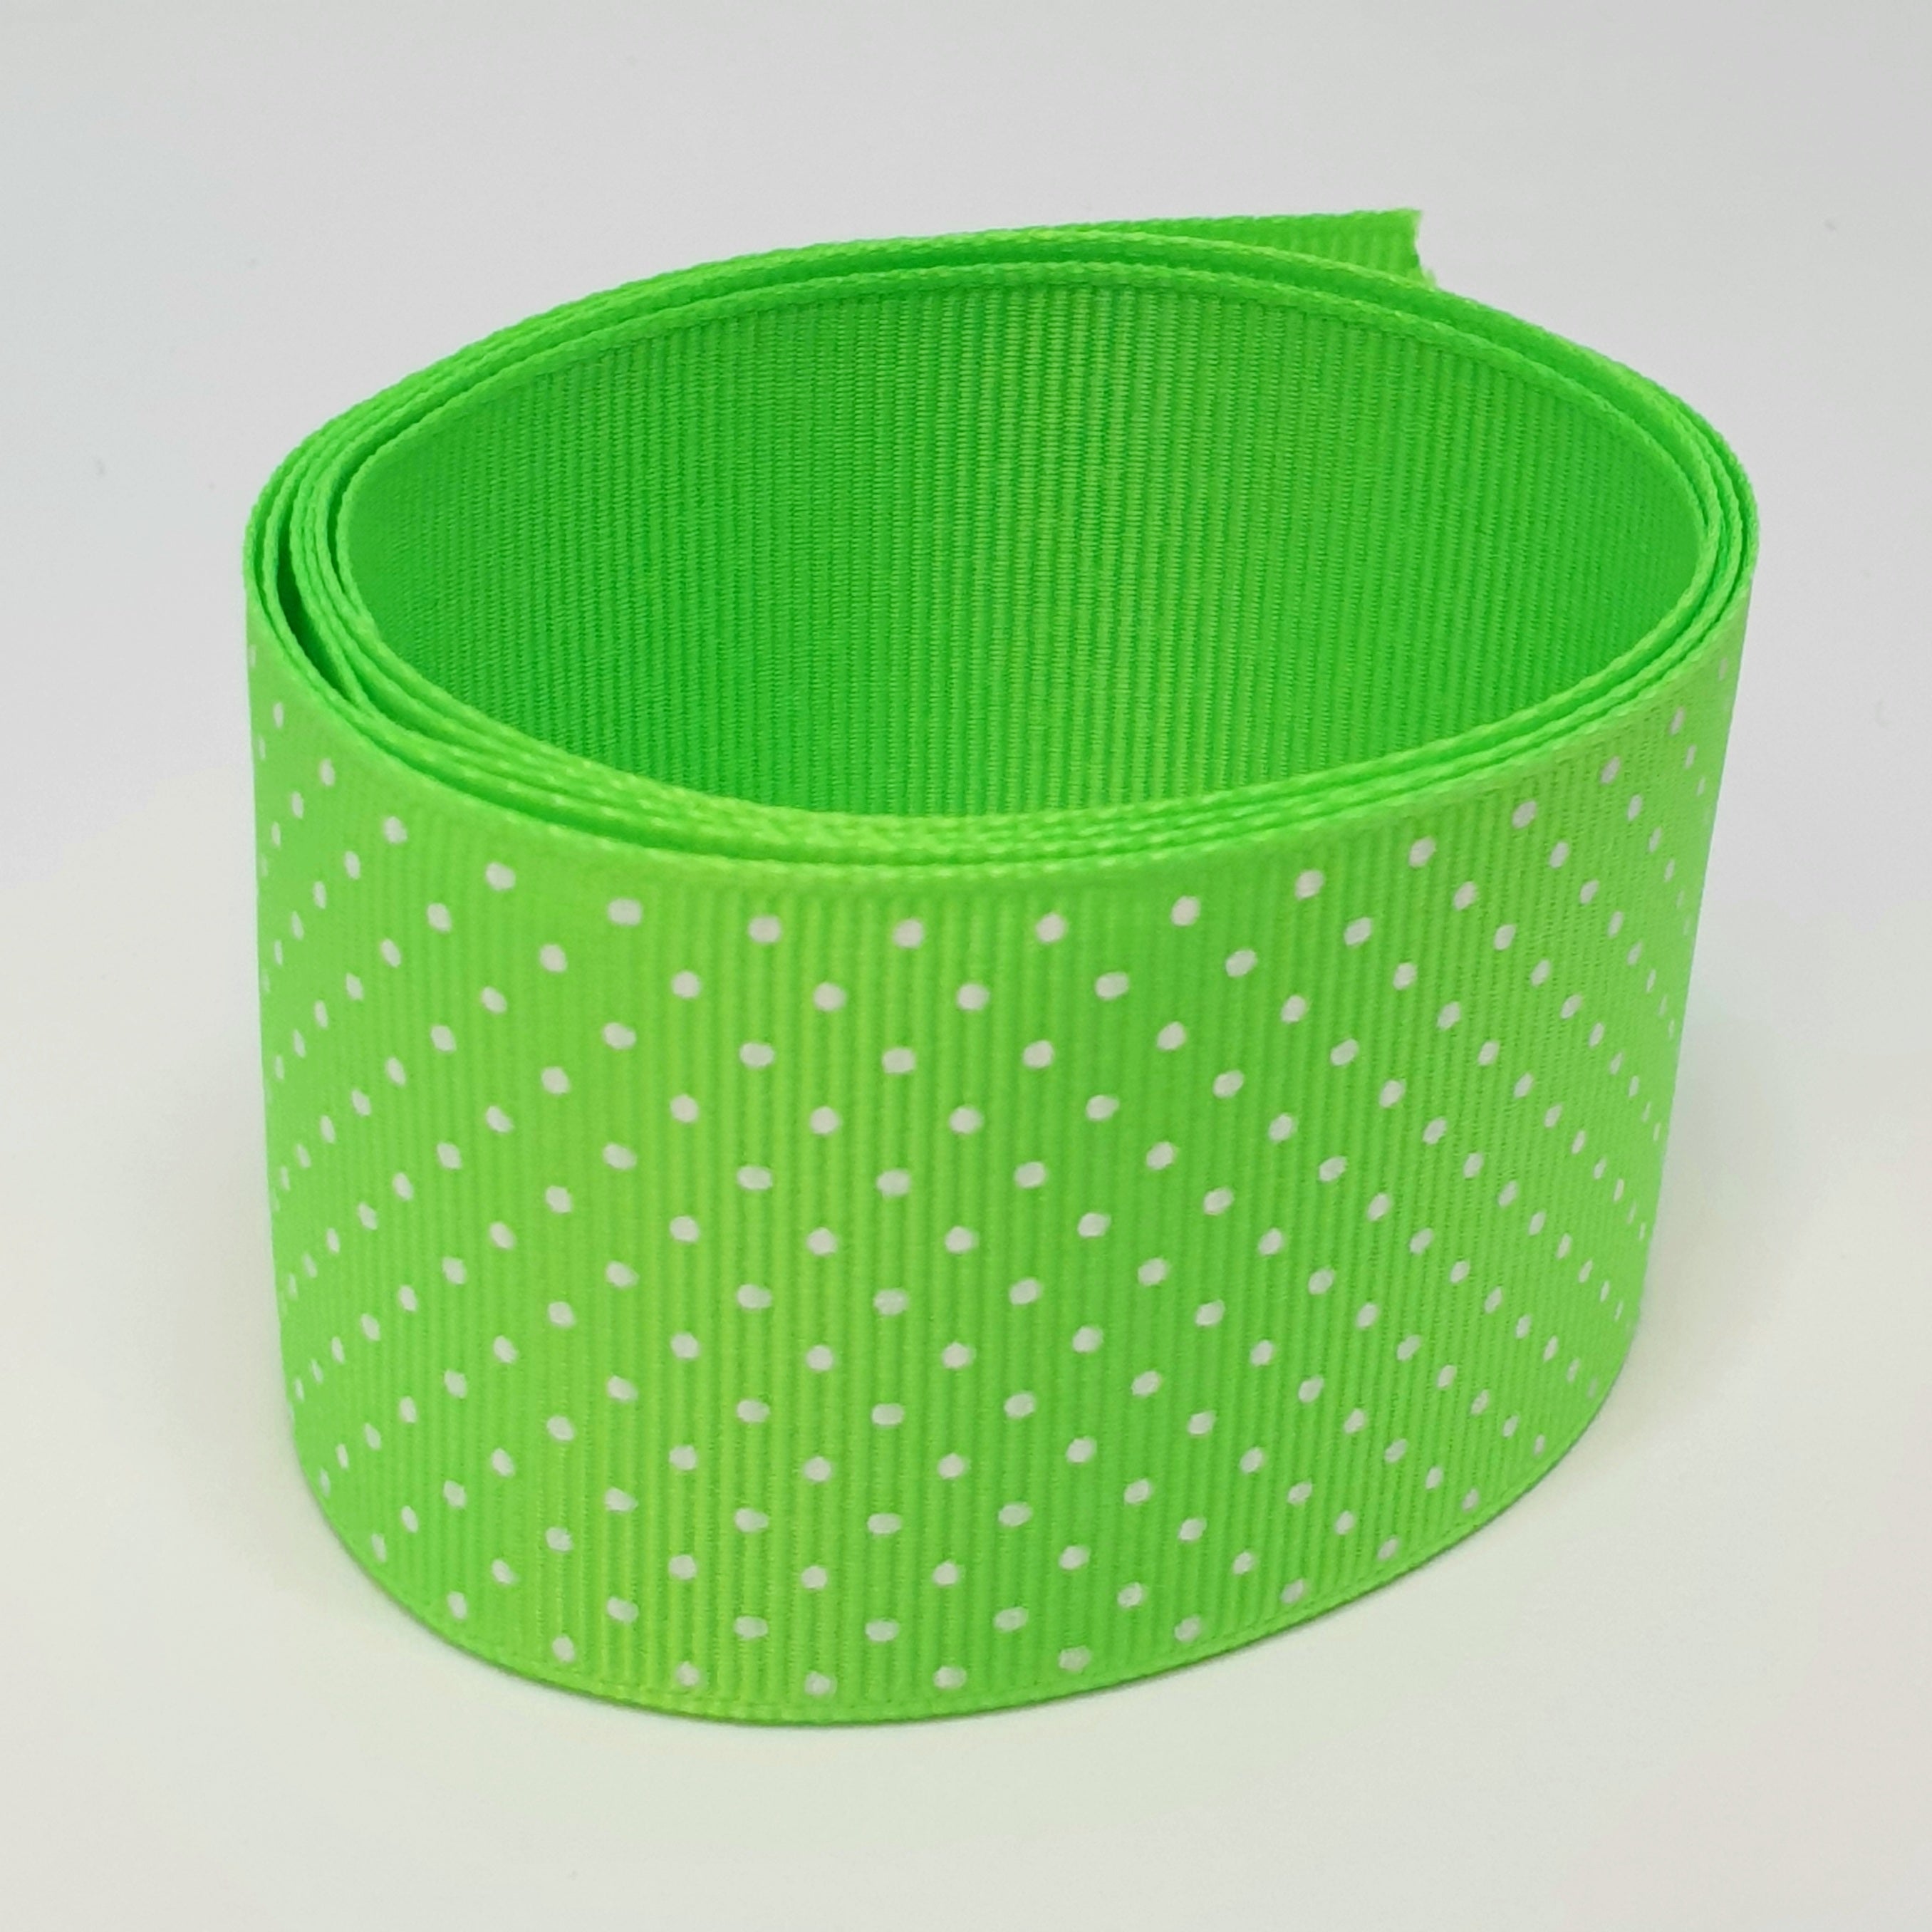 MajorCrafts 40mm 1metre Neon Green Polka Dot Single Sided Grosgrain Fabric Ribbon